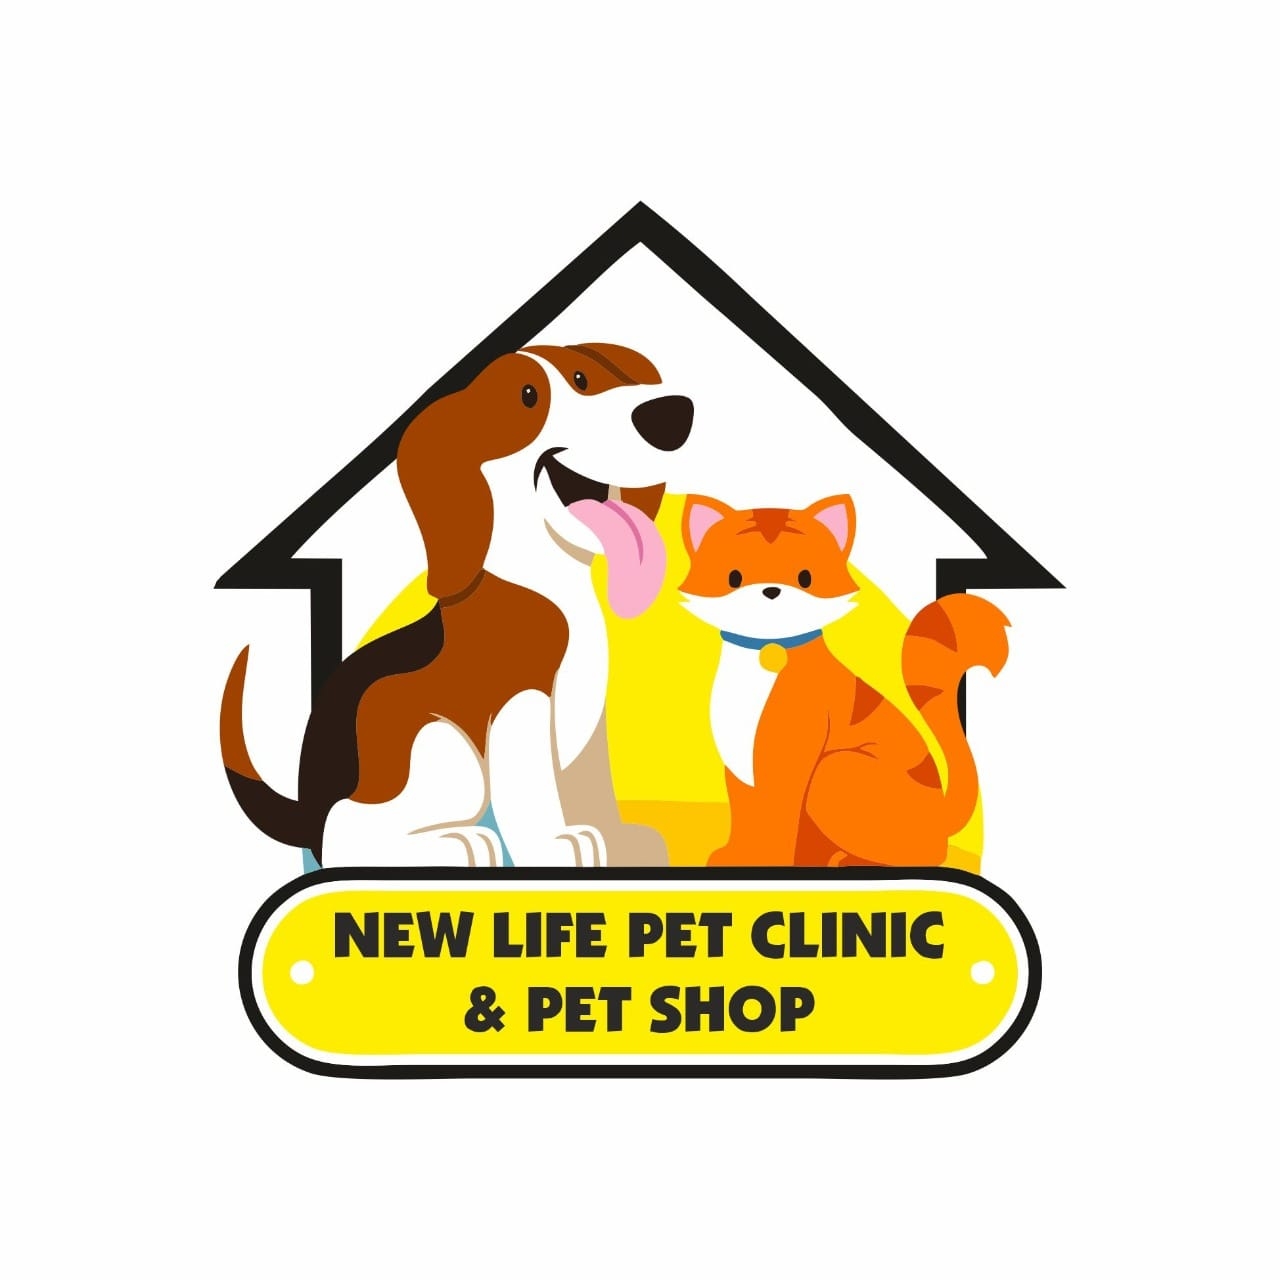 New life pet clinic & pet shop|Veterinary|Medical Services